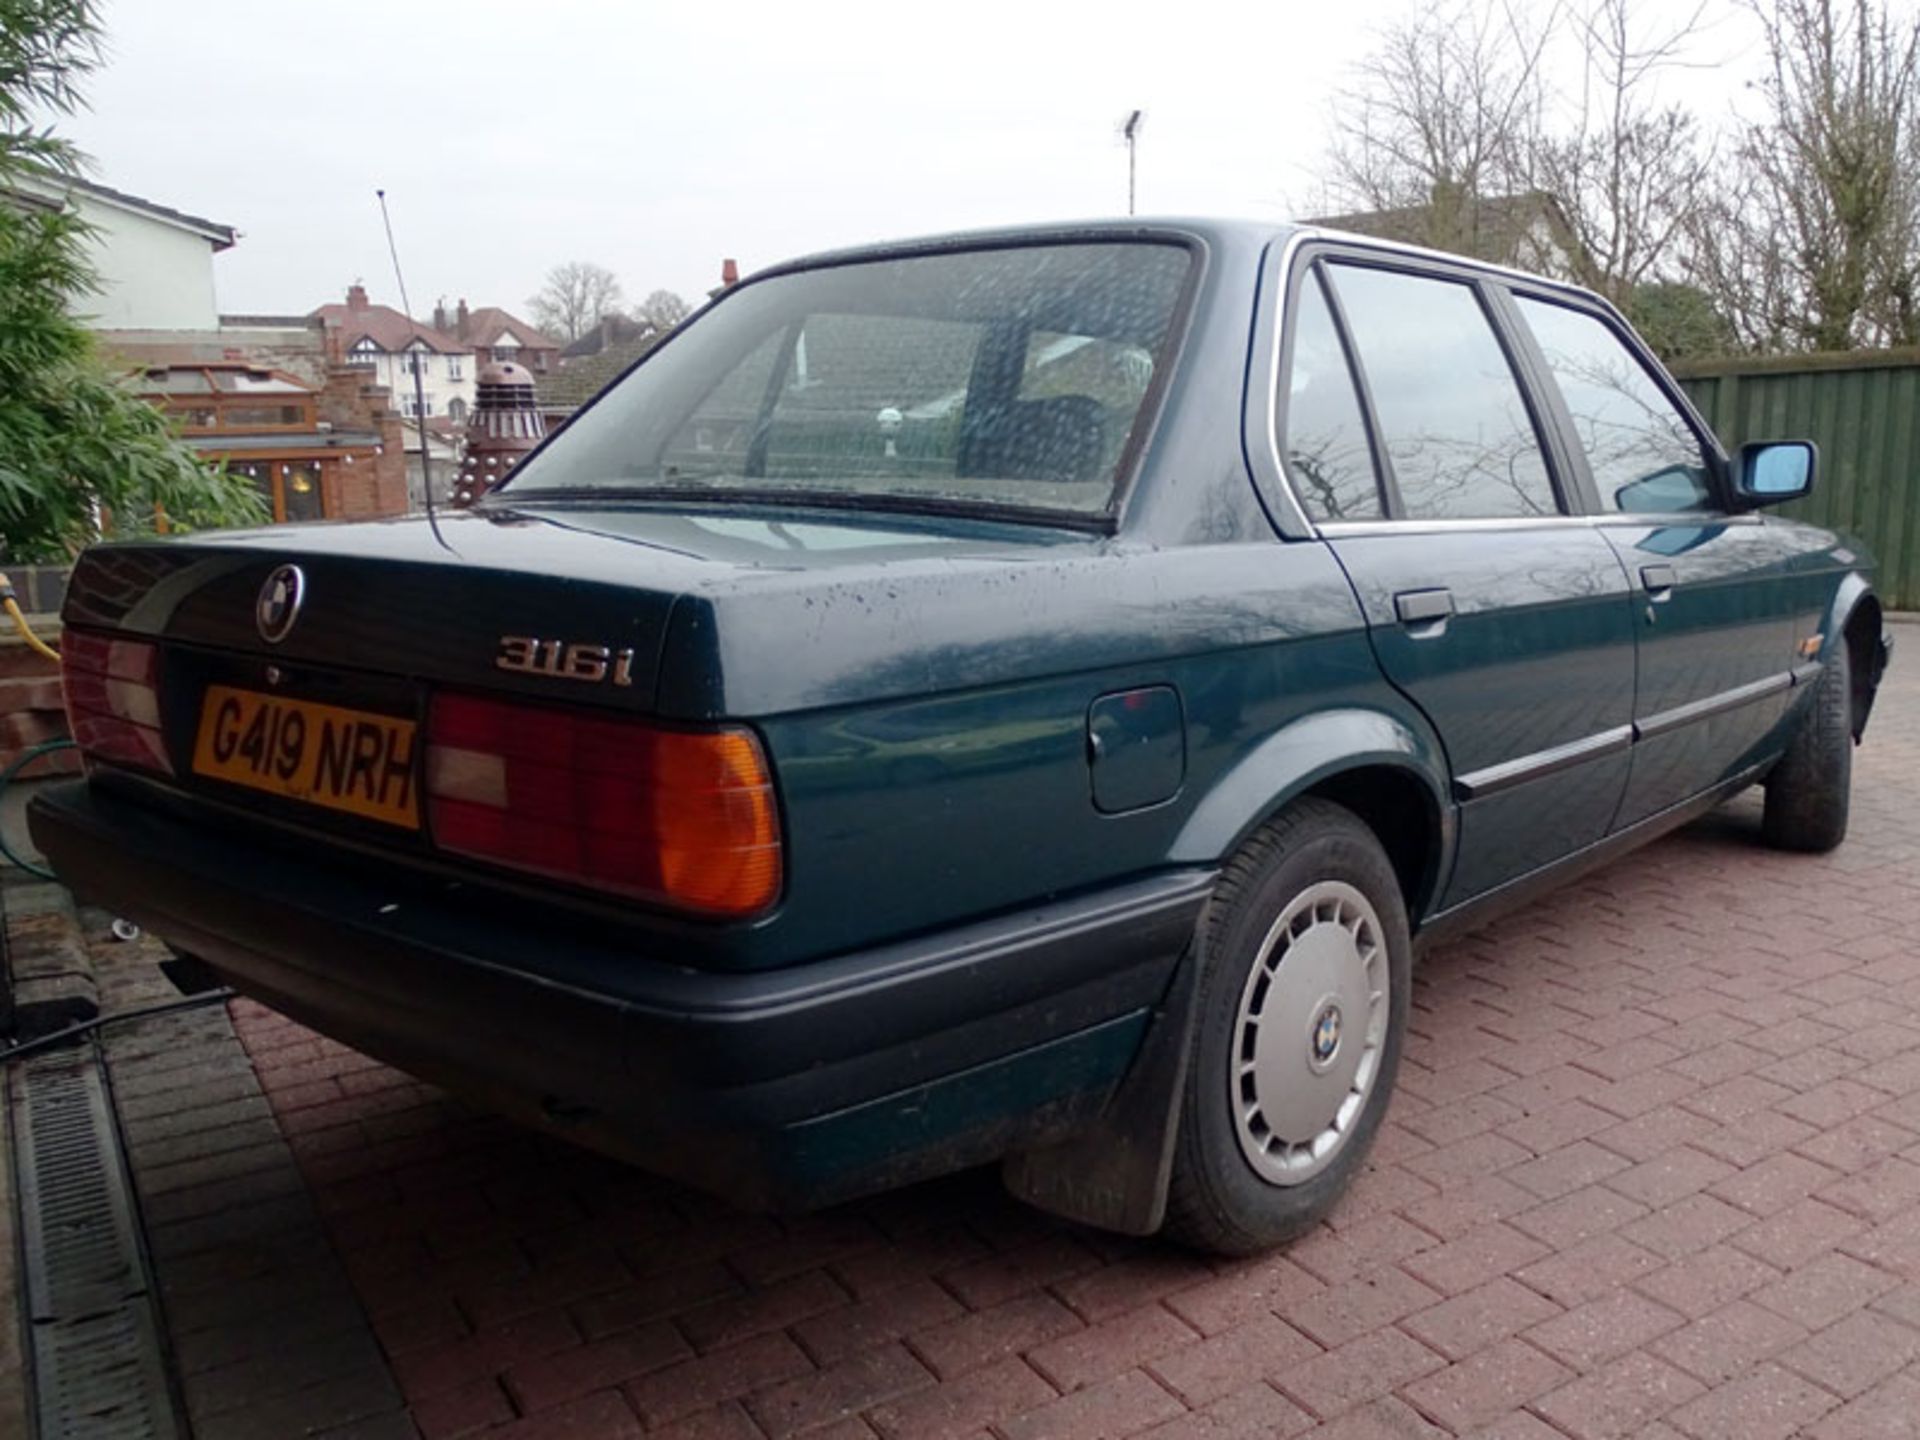 1990 BMW 316i - Image 2 of 4